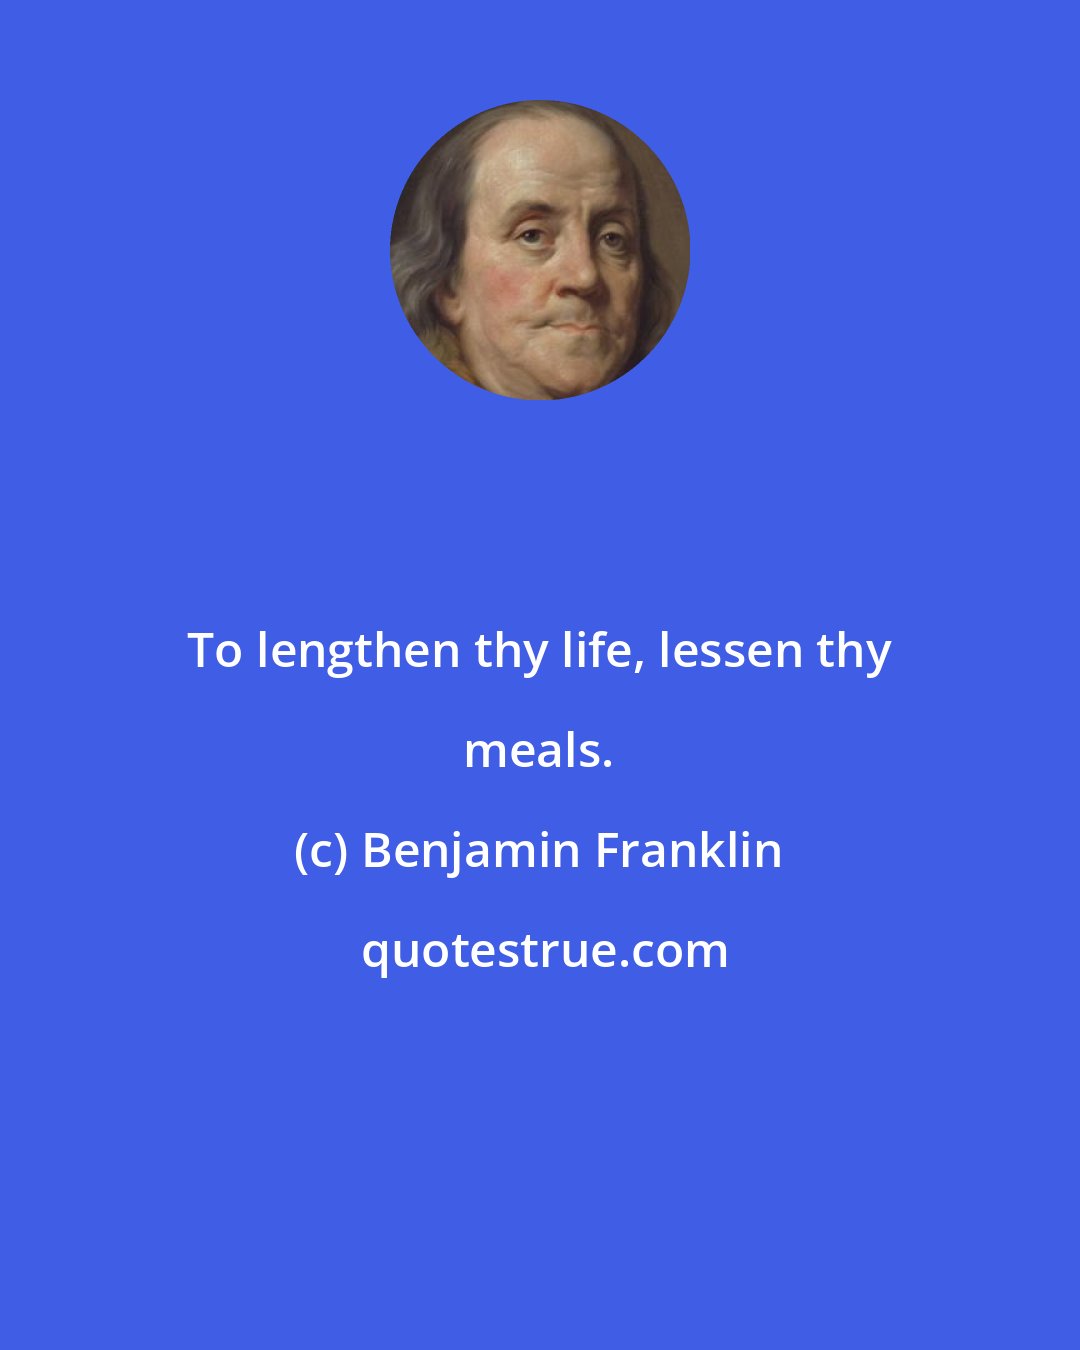 Benjamin Franklin: To lengthen thy life, lessen thy meals.